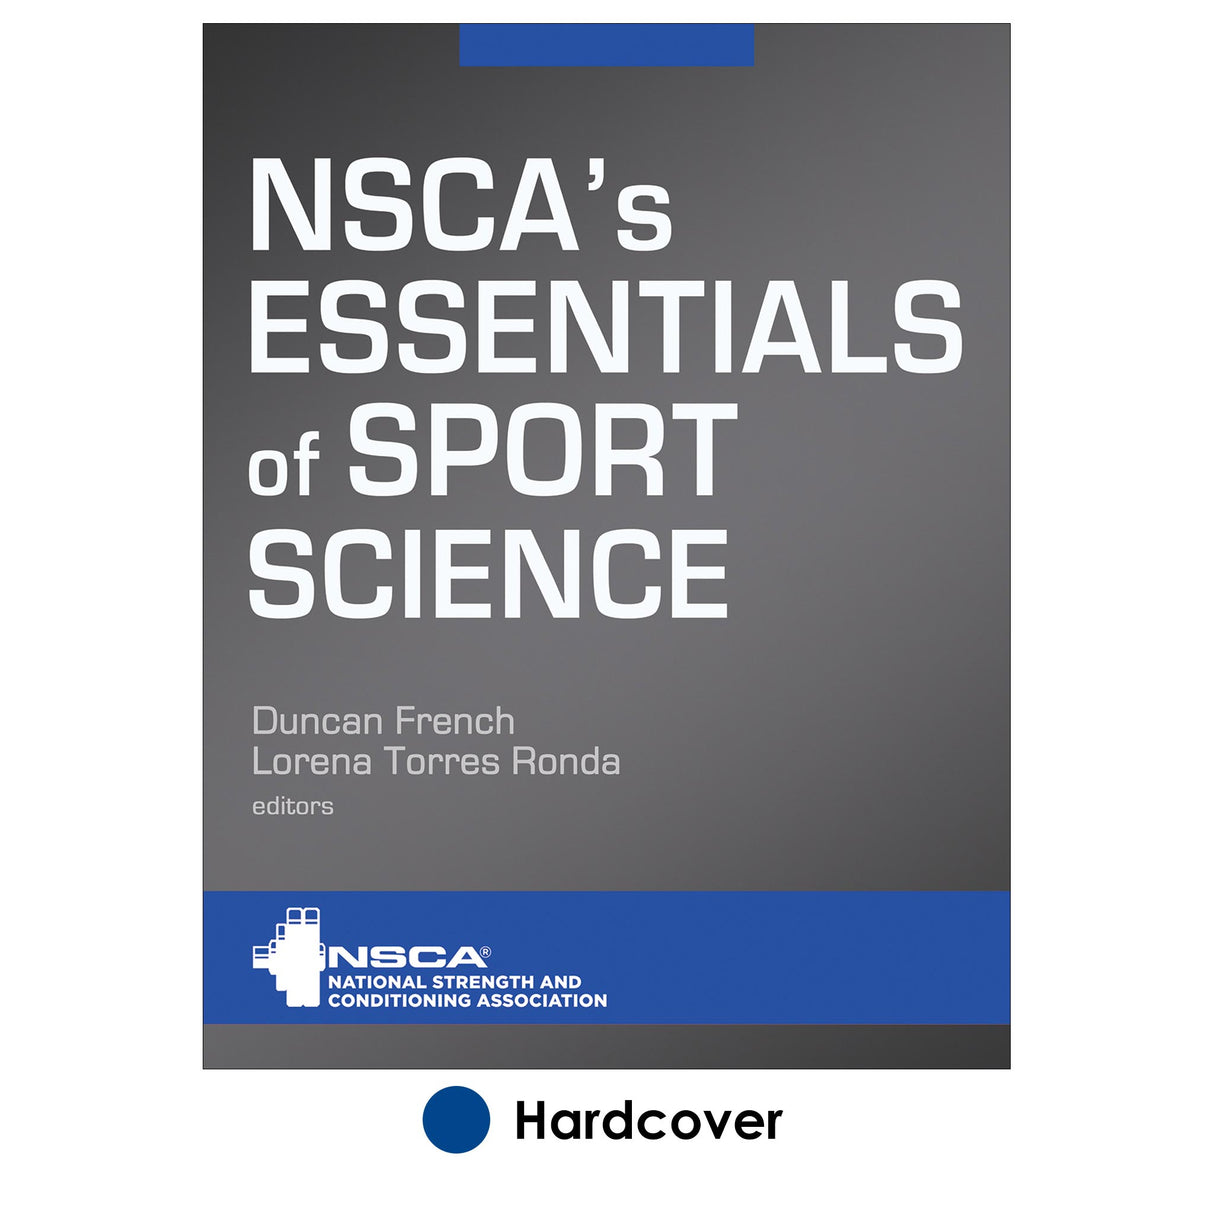 NSCA's Essentials of Sport Science